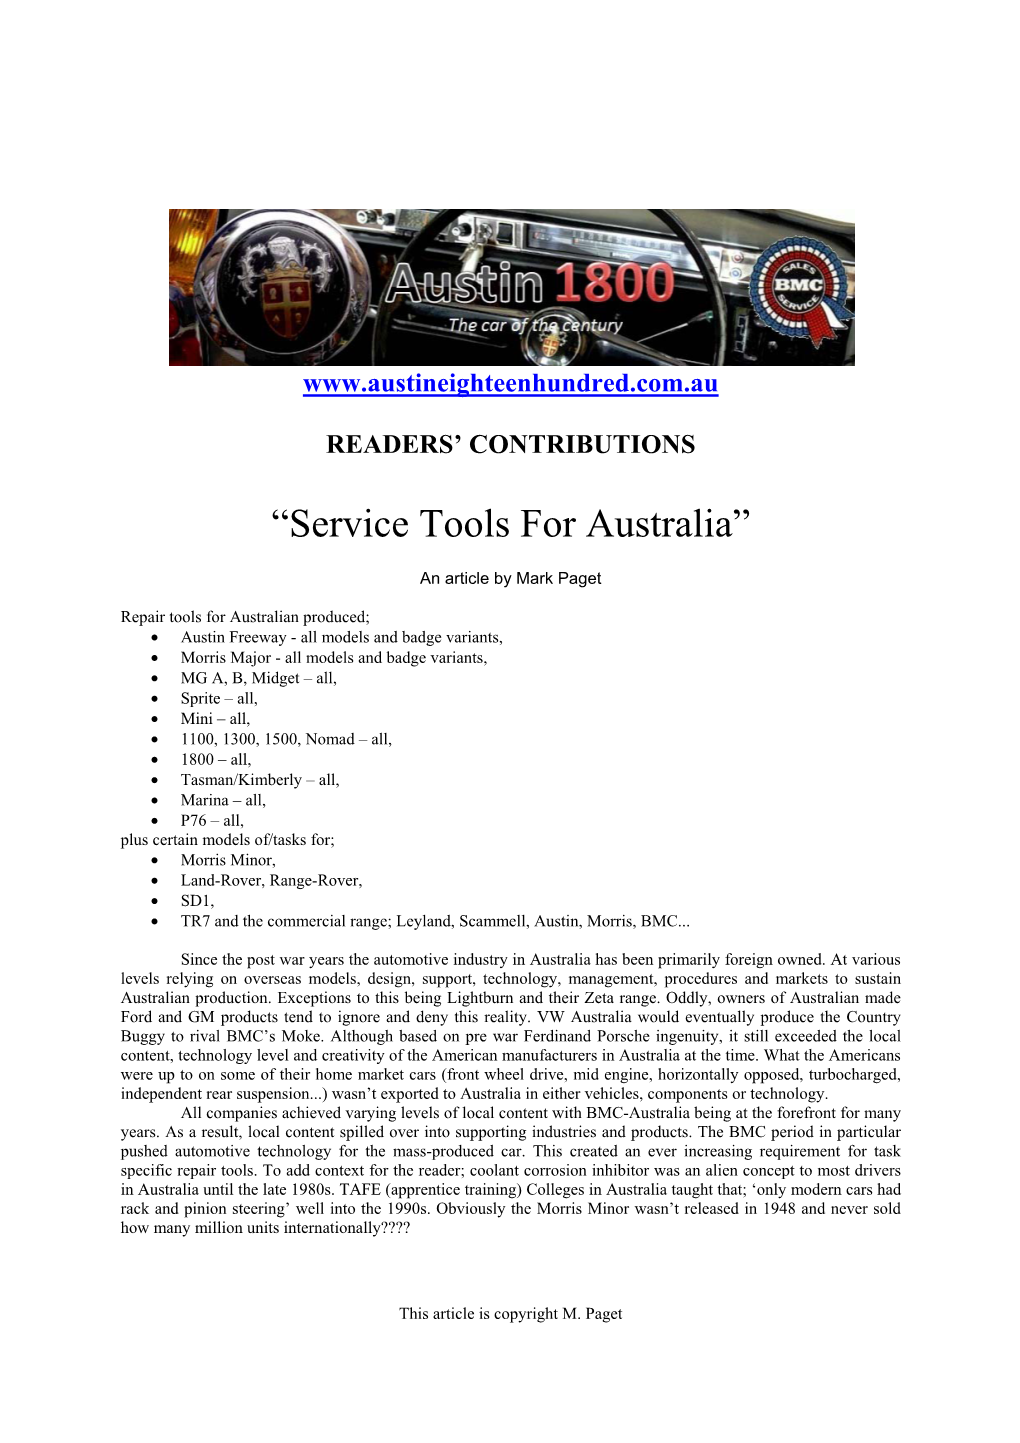 “Service Tools for Australia”